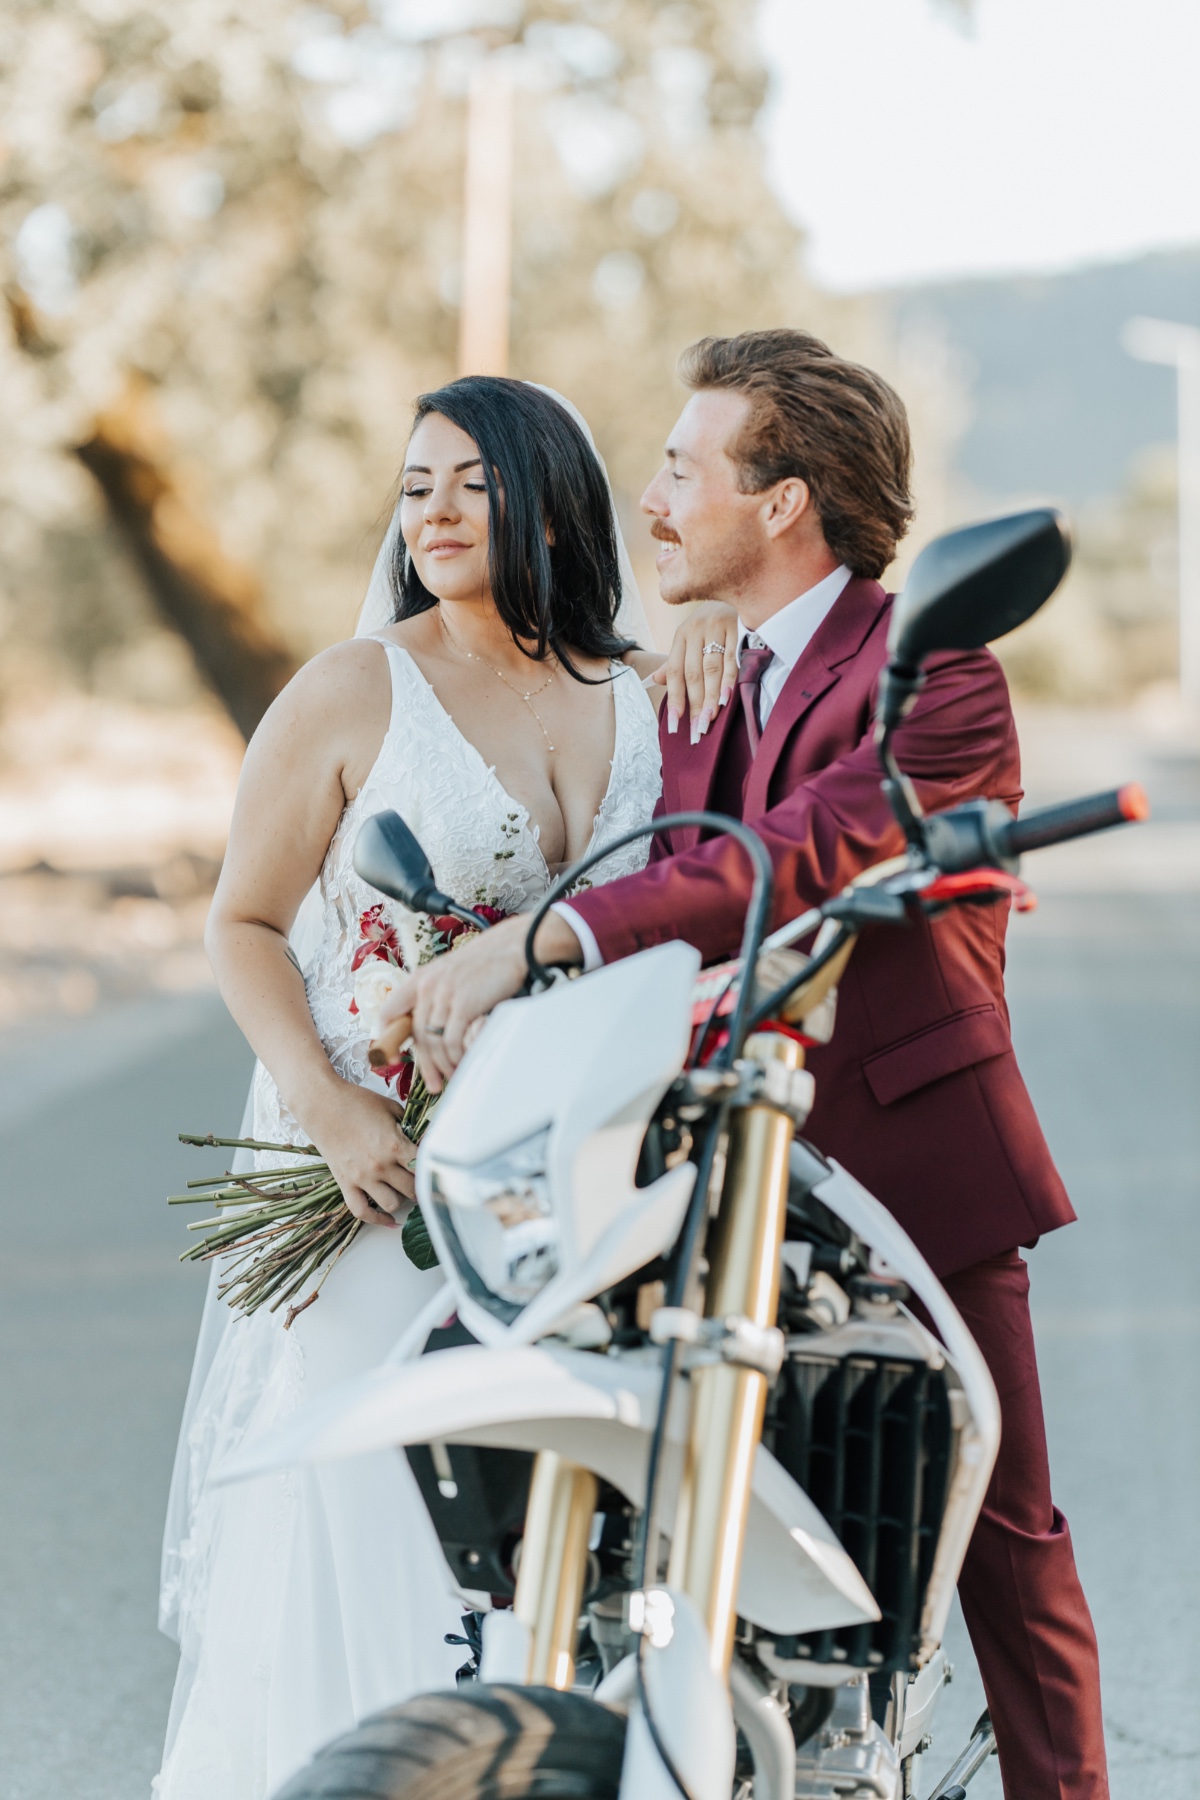 Wedding photos on a motorcycle